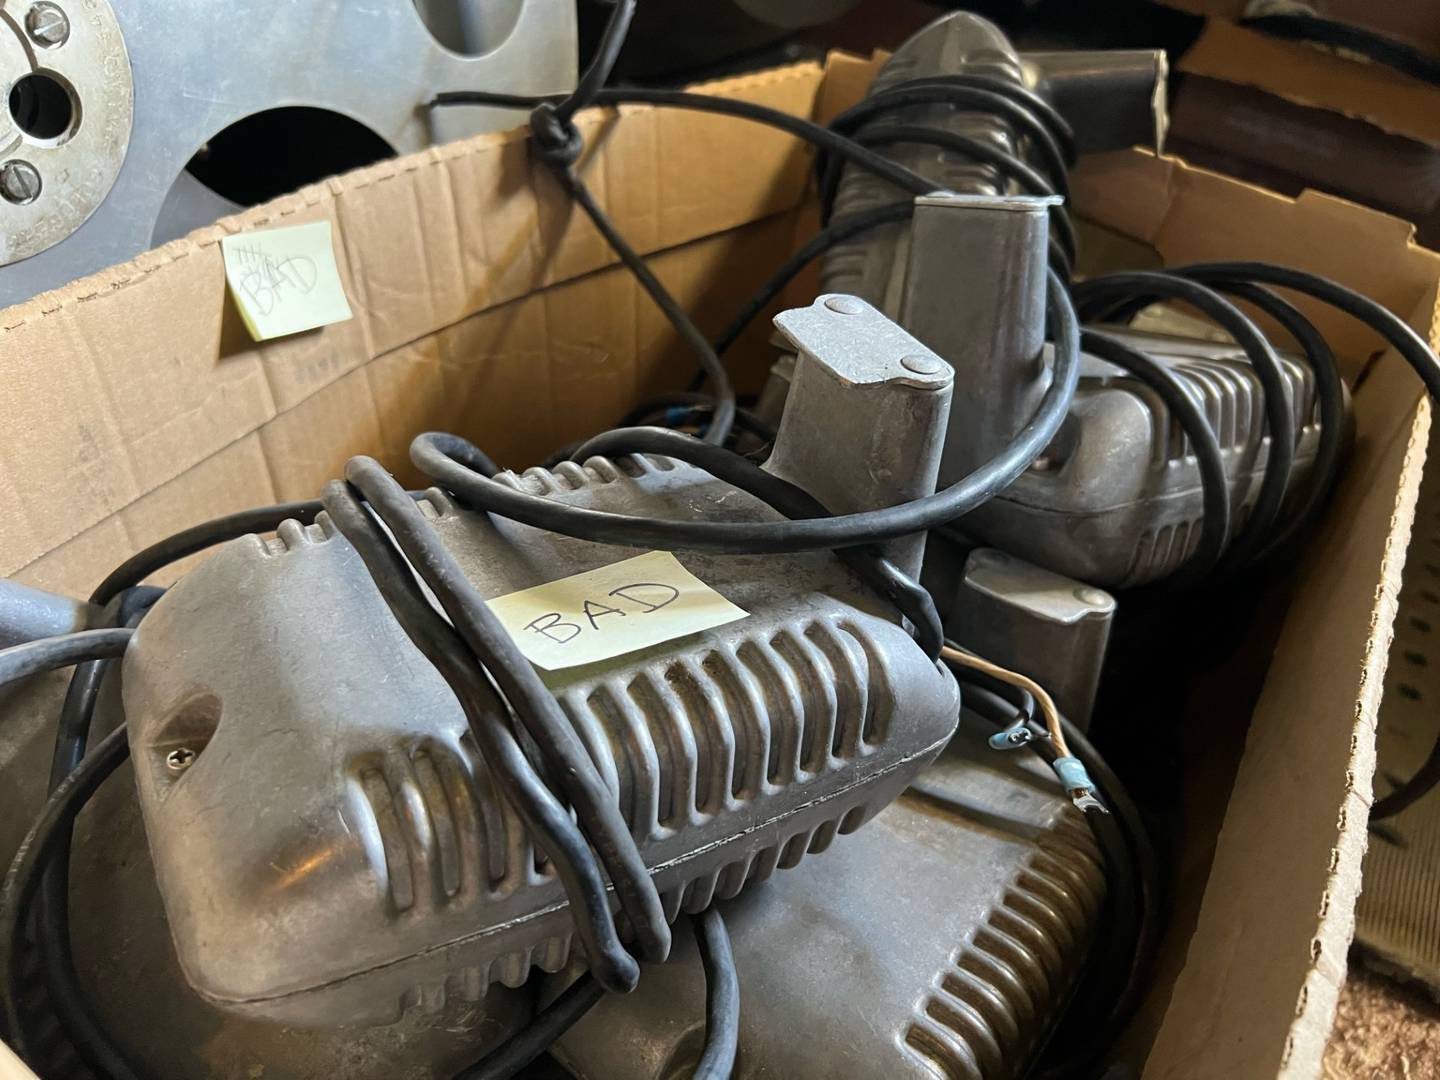 Old window speakers await repair at the drive-in in Earlville.